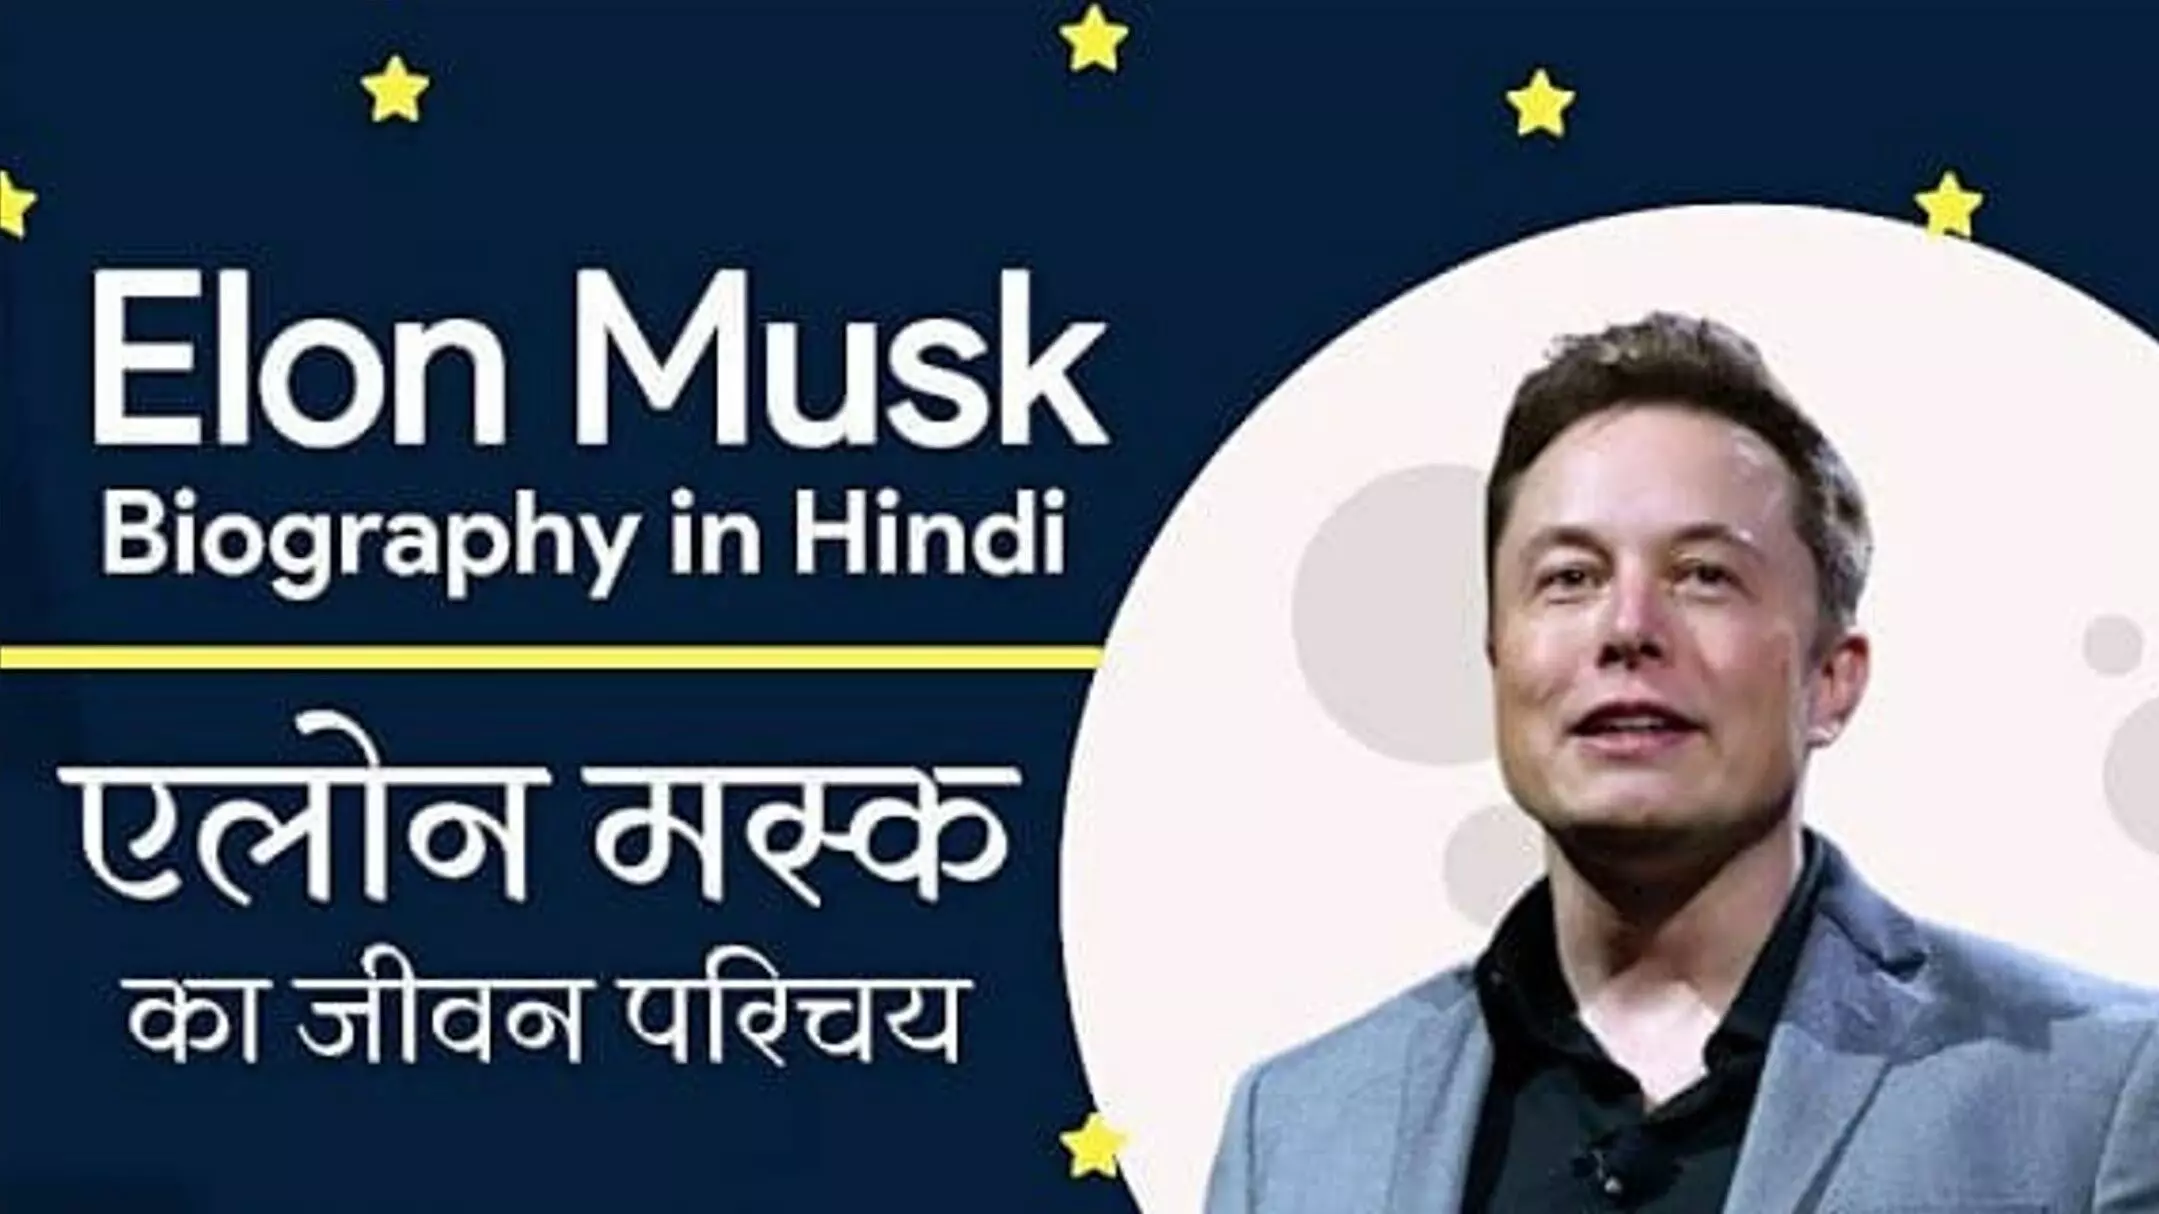 Elon Musk Biography in Hindi: एलन मस्क का जीवन परिचय